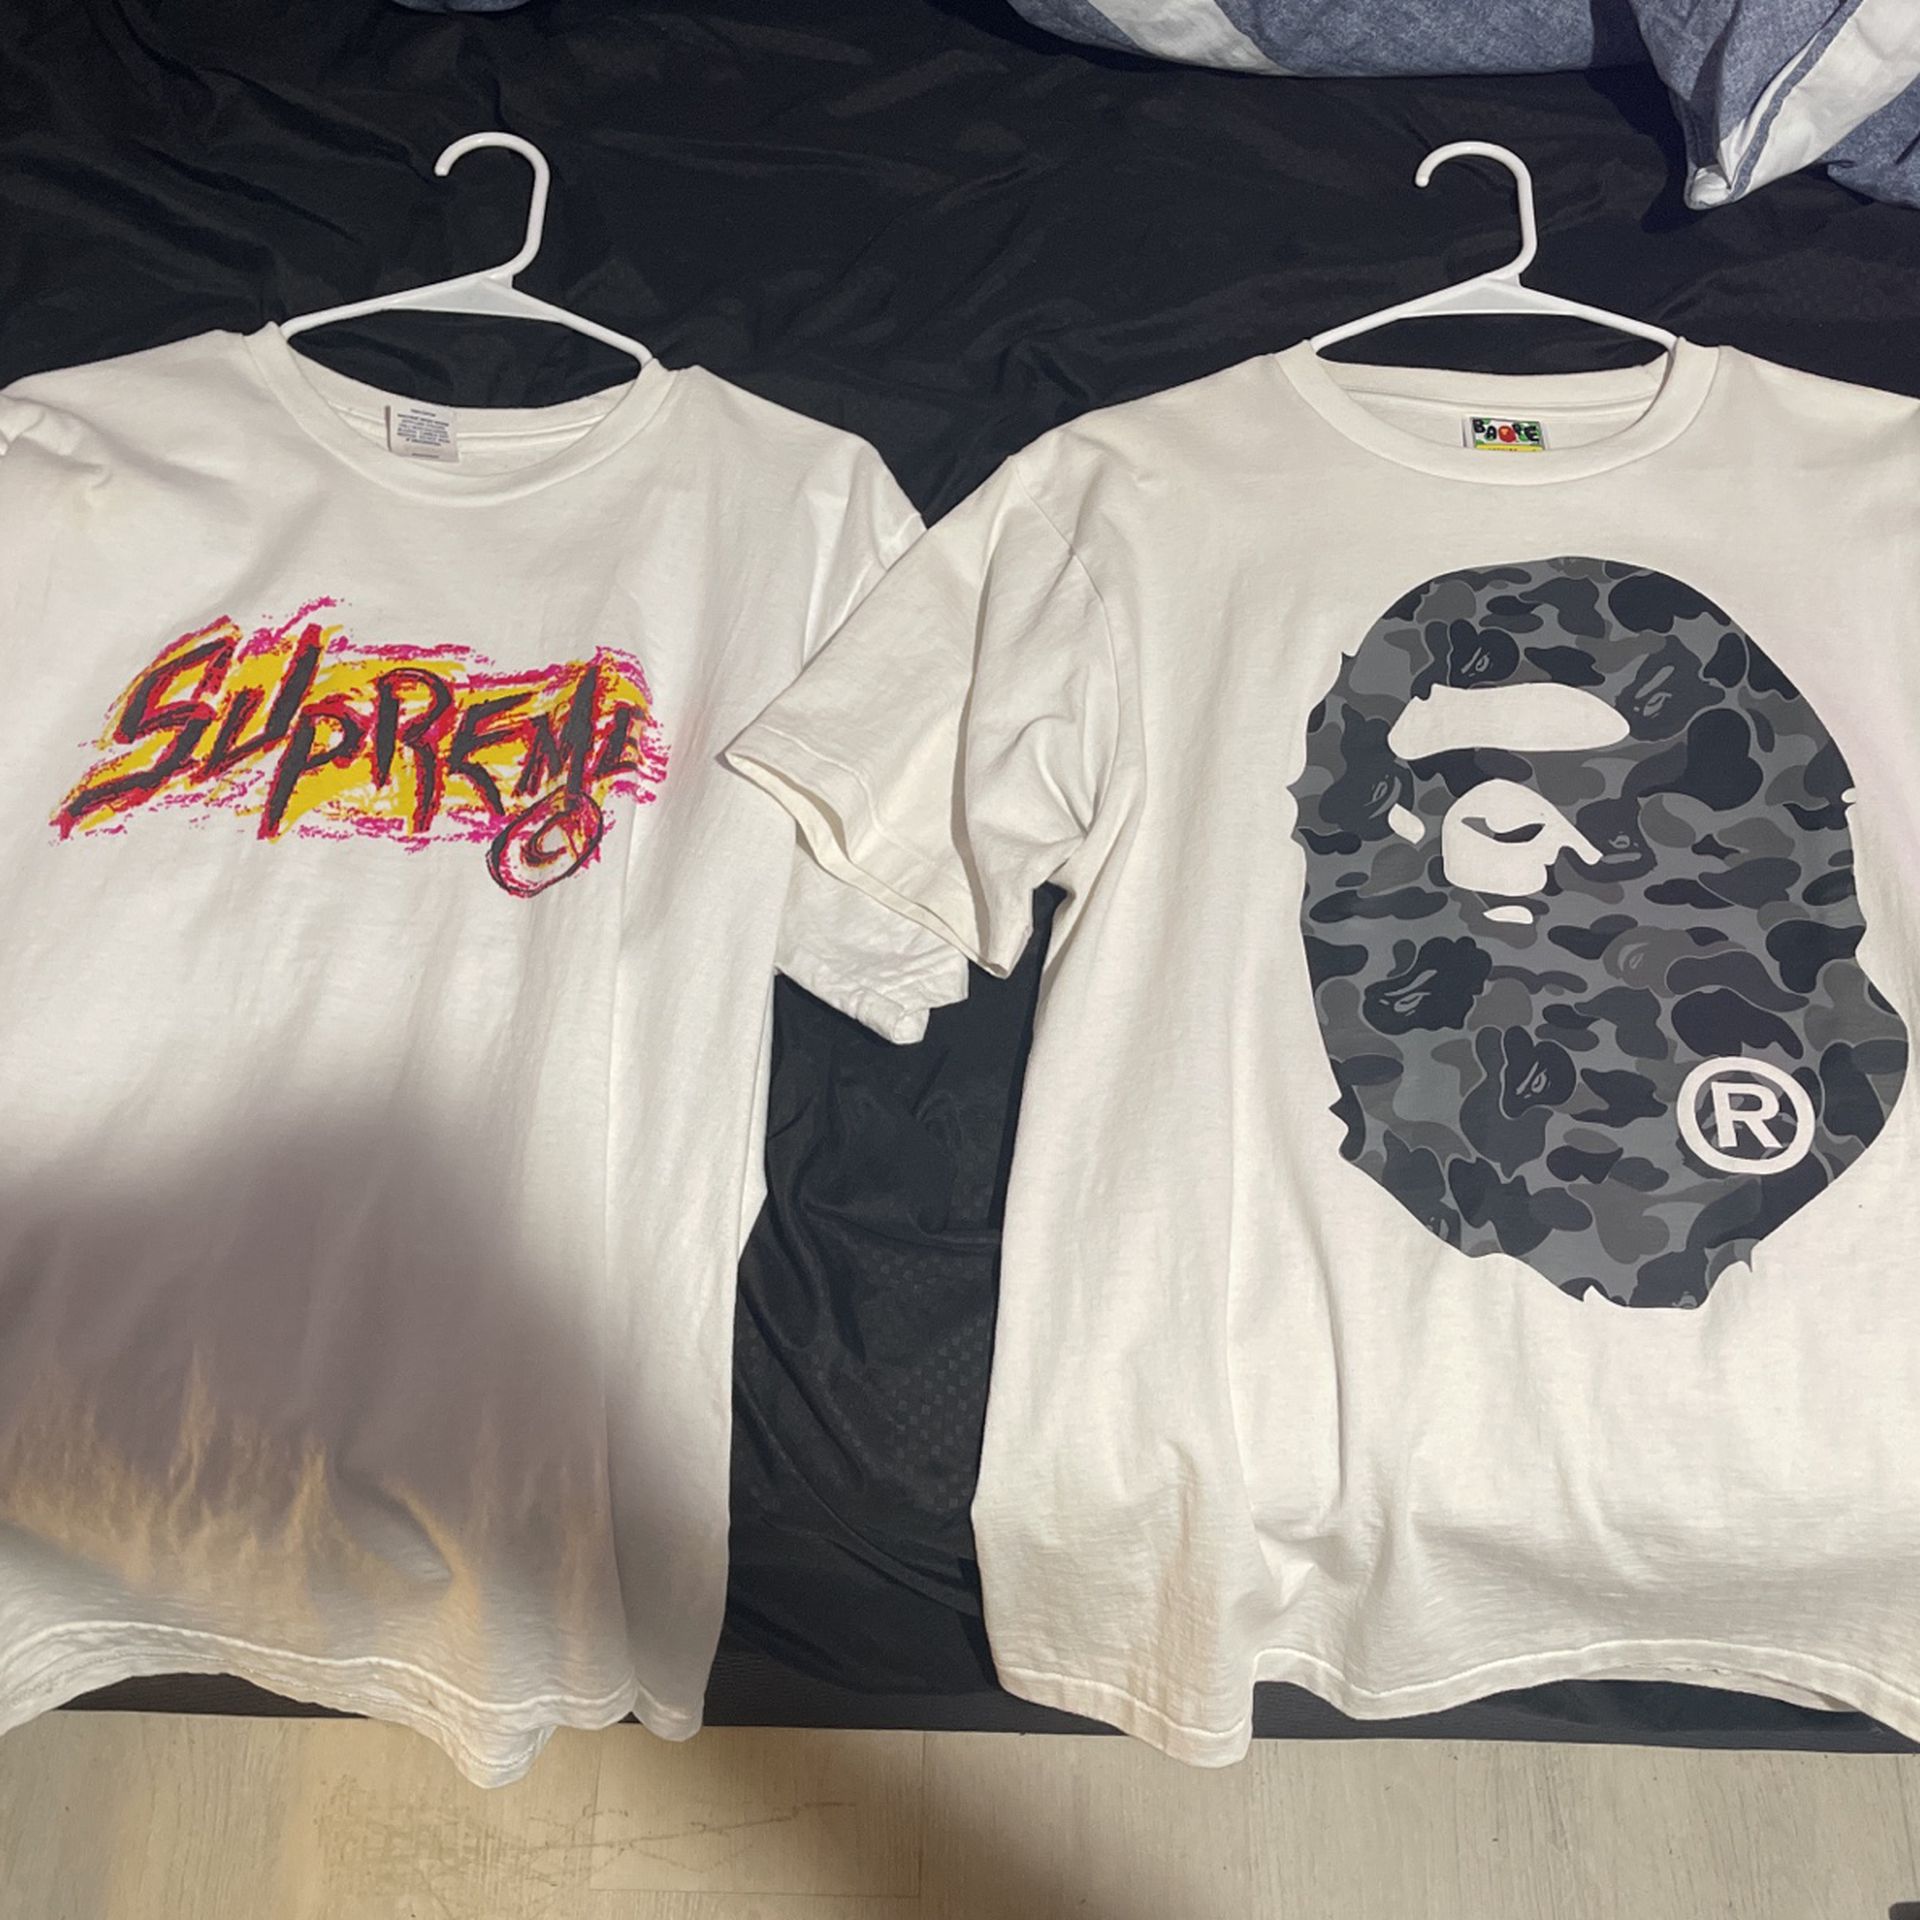 Supreme/ Bape Combo Both For 140 Each Shirt Is 110$ On Stadium Goods 